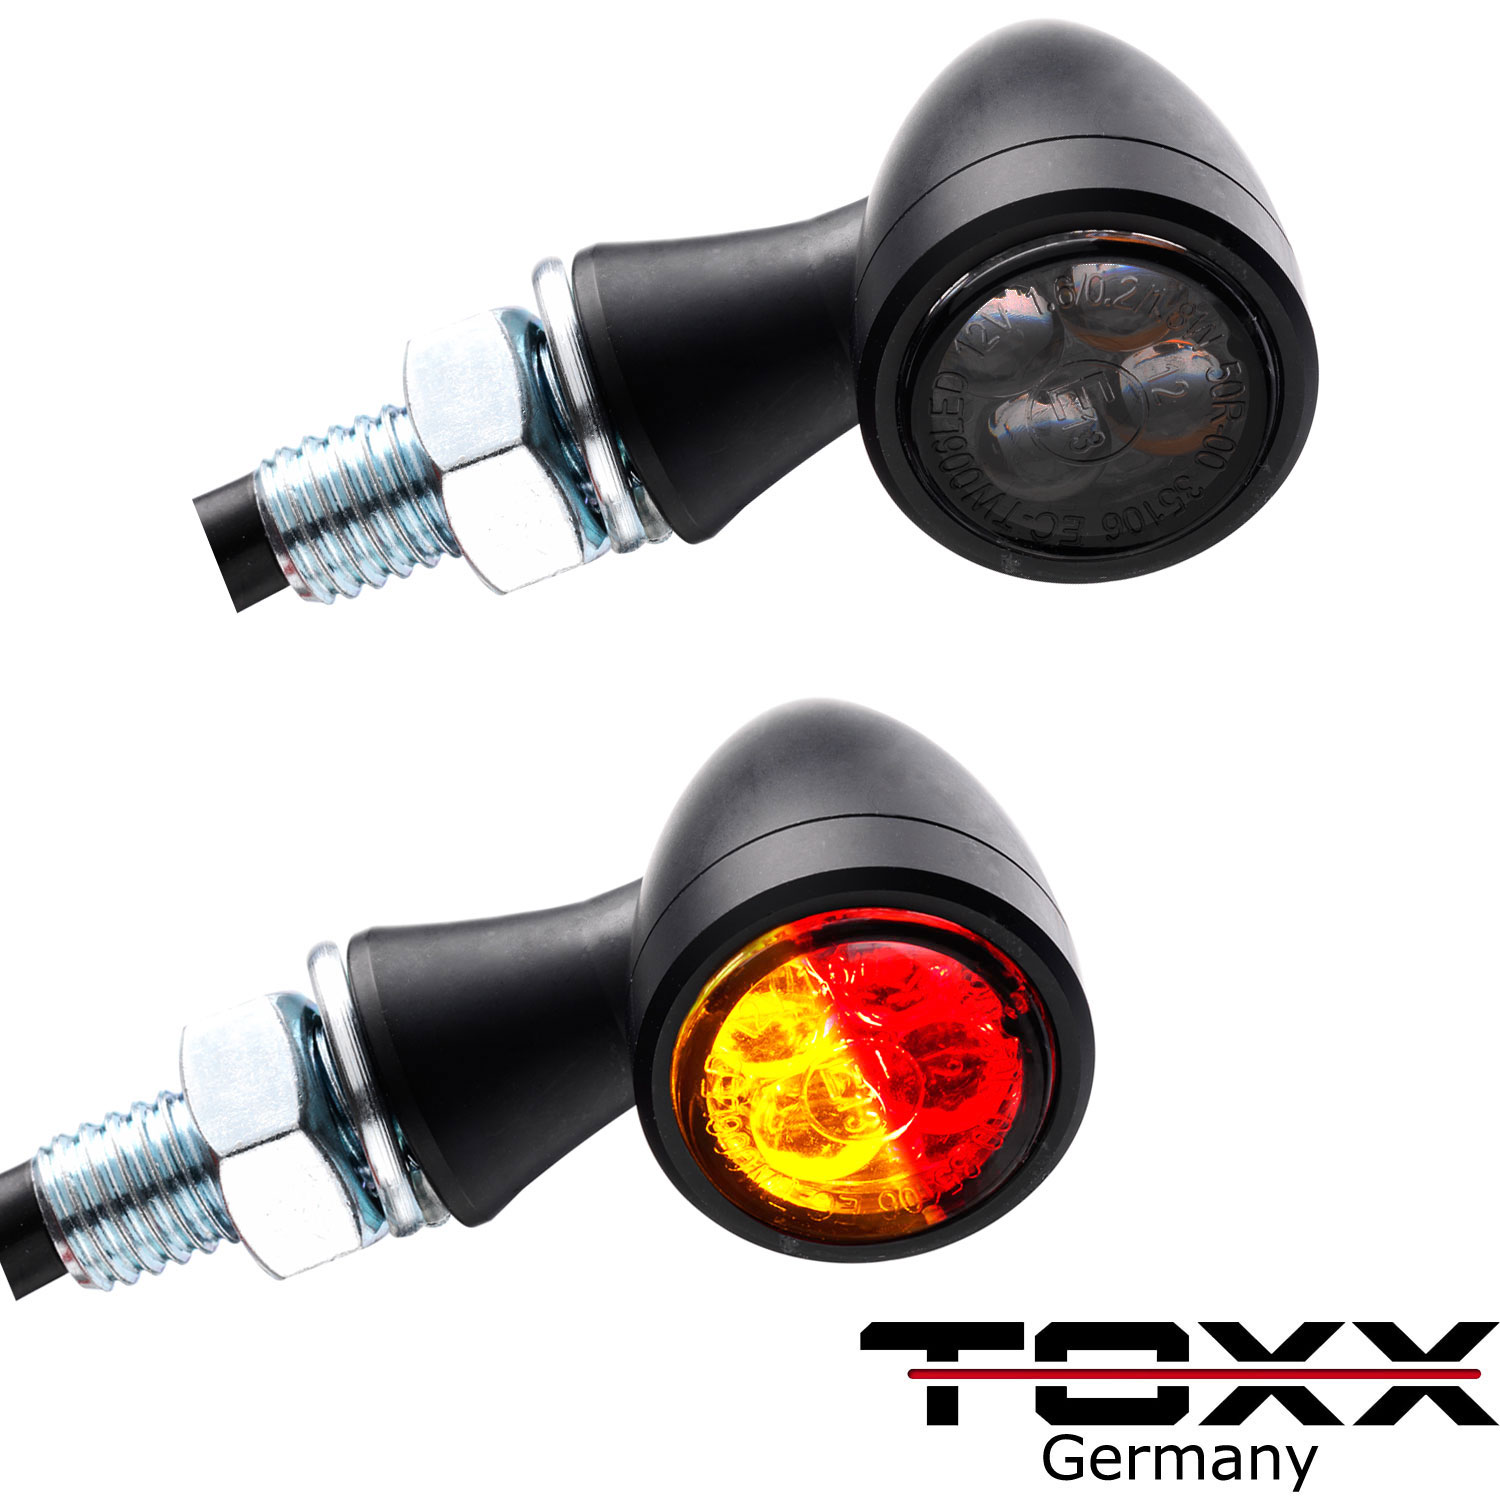 Toxx LED Rücklicht Blinker Zero schwarz getönt, Blinker-/Rücklicht Kombi  3-in-1, Blinker